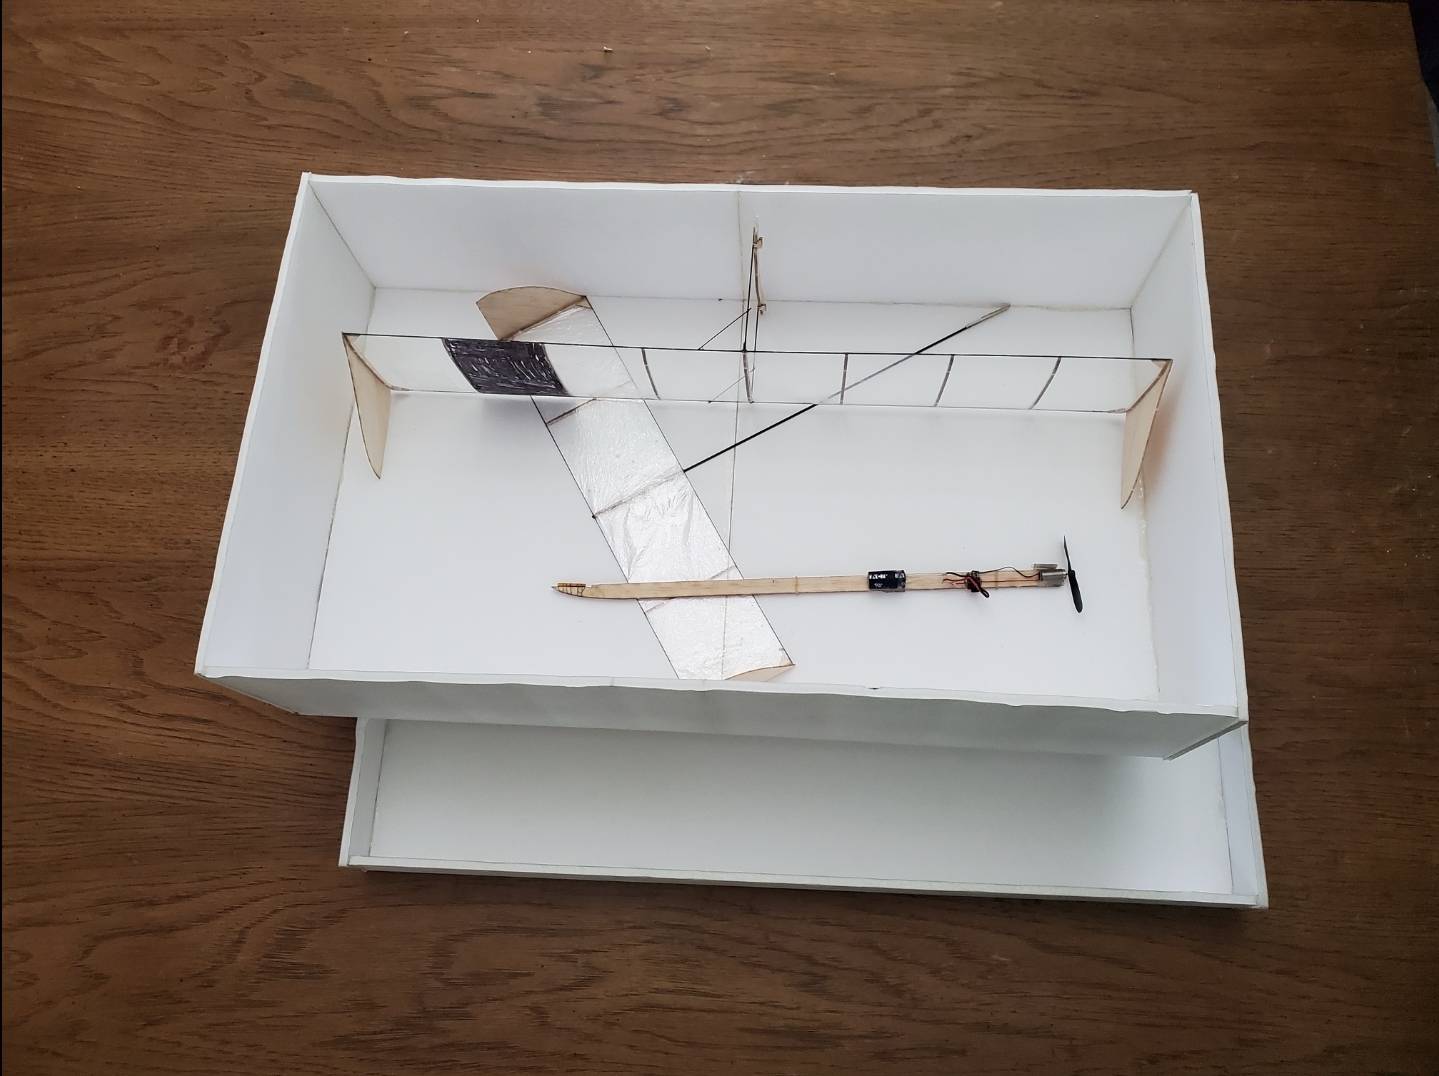 Model Storage Box